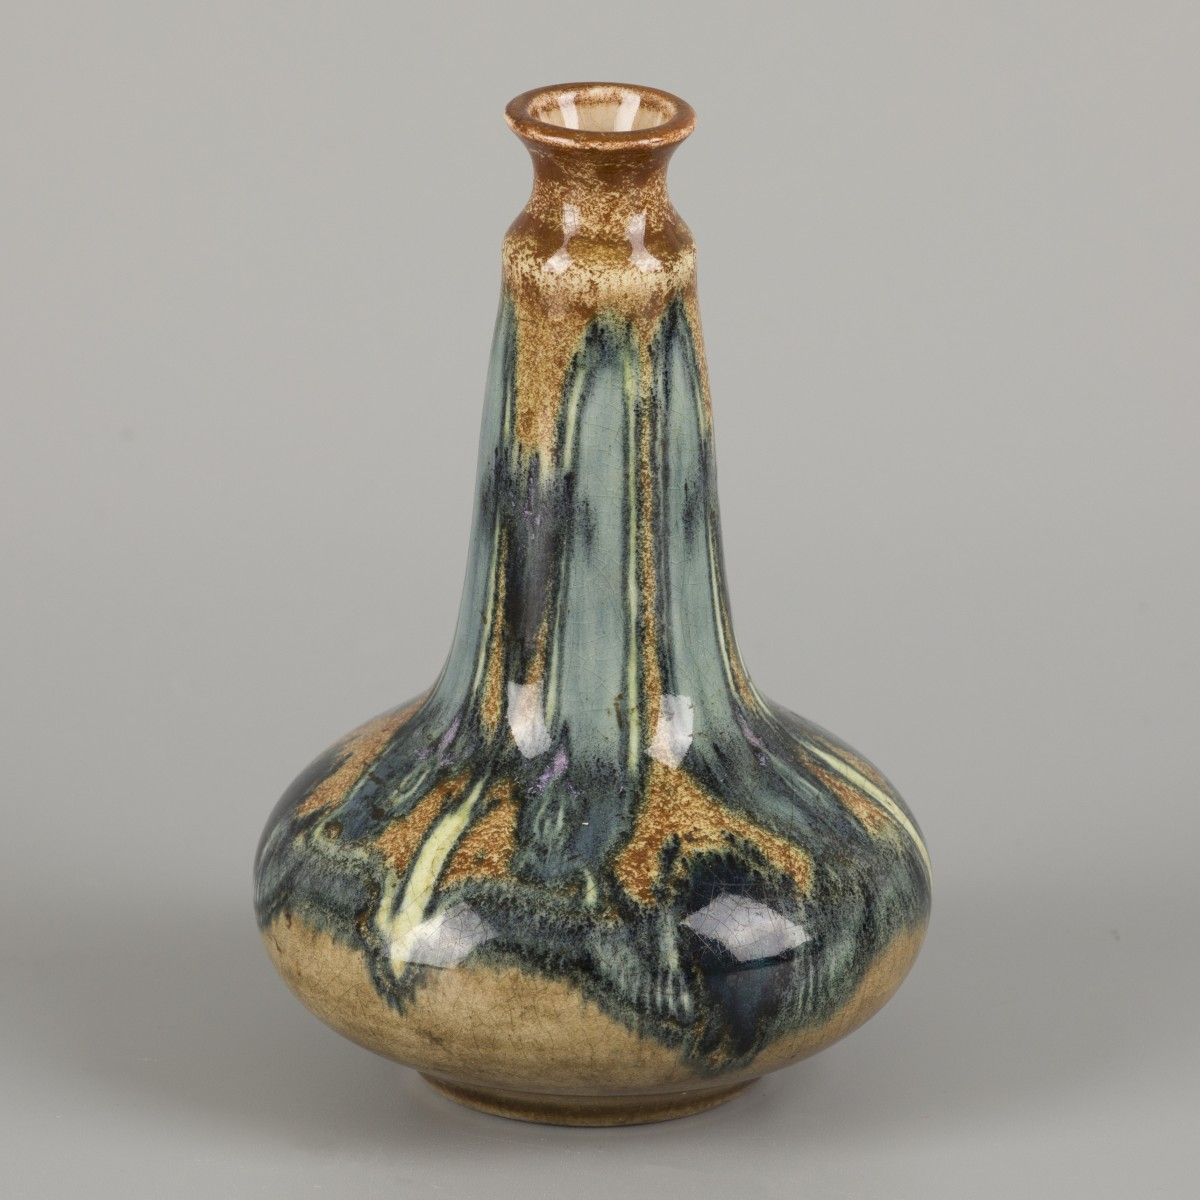 J.W. Mijnlieff (Jutphaas 1862 - 1940 Scheveningen), a vase with stylized Jugends&hellip;